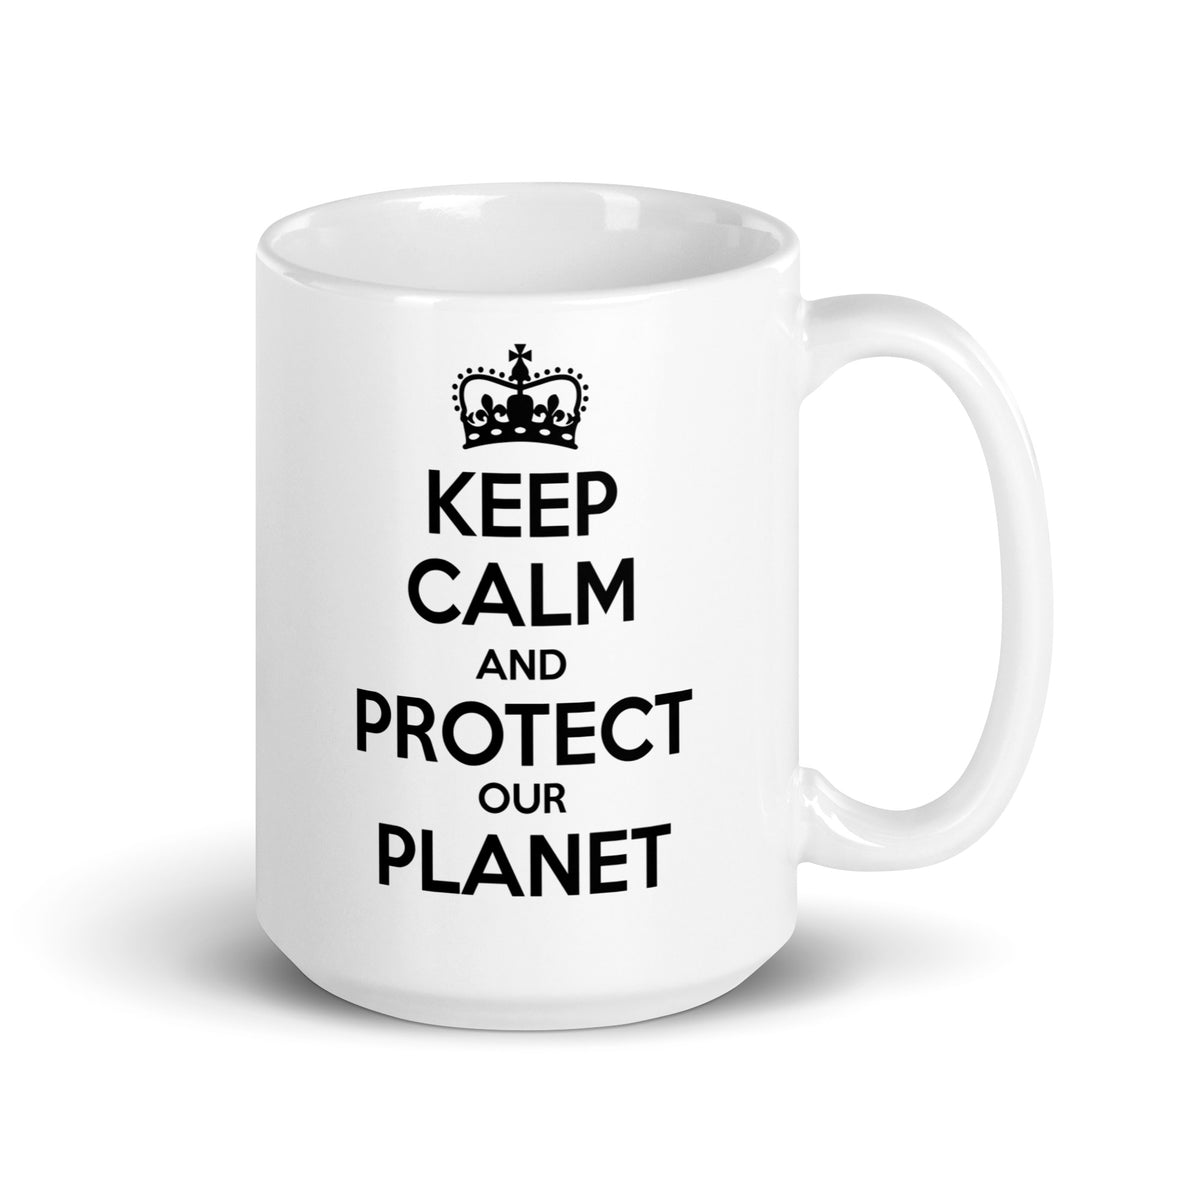 KEEP CALM PROTECT THE PLANET White glossy mug